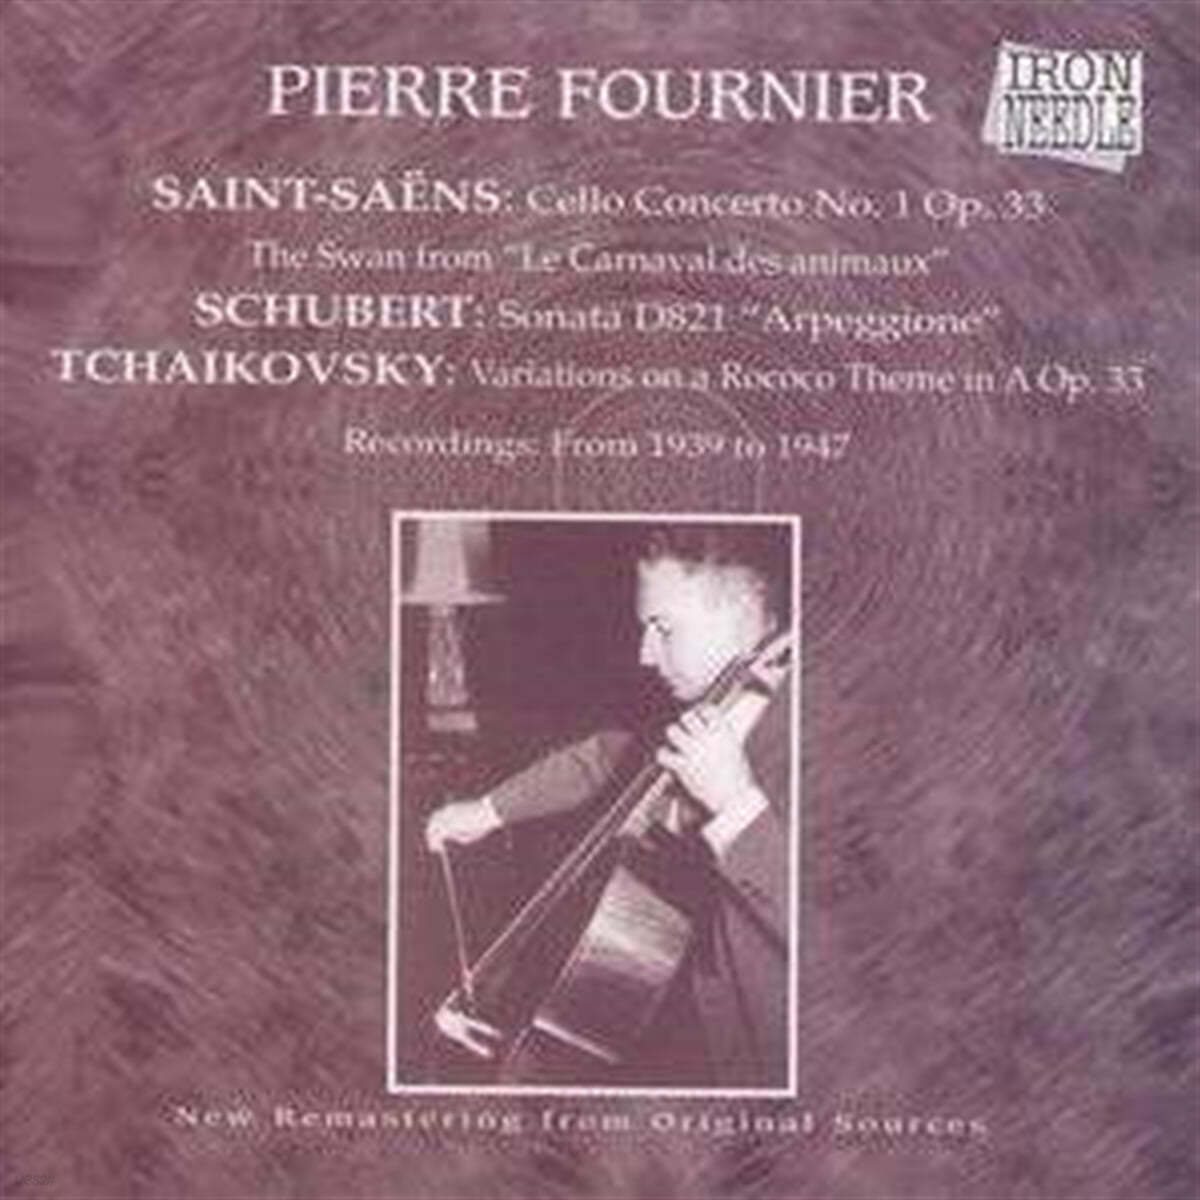 Pierre Fournier 생상스: 첼로 협주곡 1번 (Saint-Saens: Cello Concerto Op.33)  